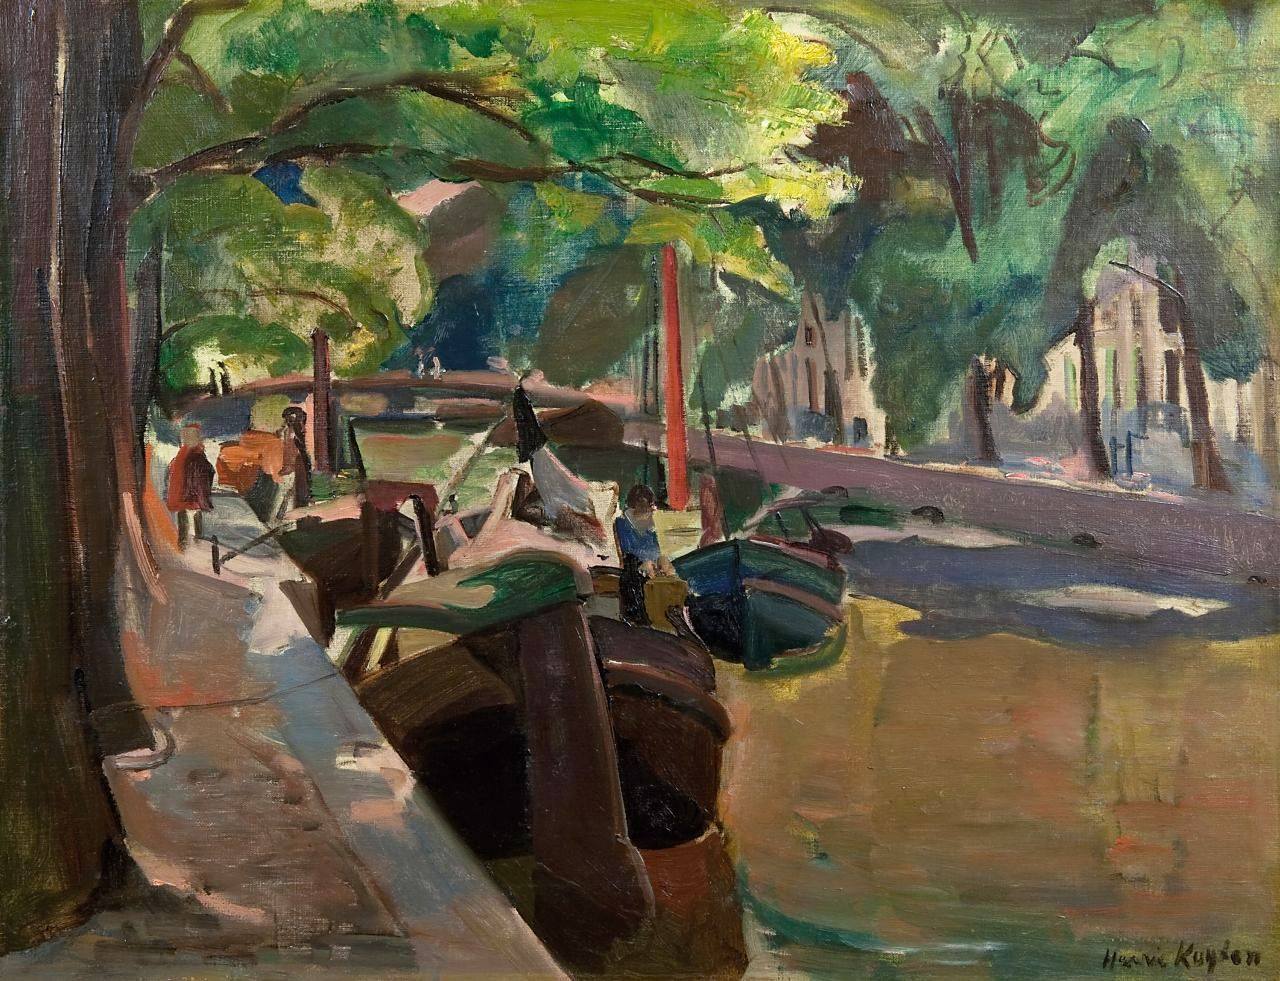 huariqueje:
â€œ Herengracht with Sun , Amsterdam - Harry Kuijten
Dutch , 1883 - 1952
Oil on canvas, 52,2 x 67,9 cm.
â€